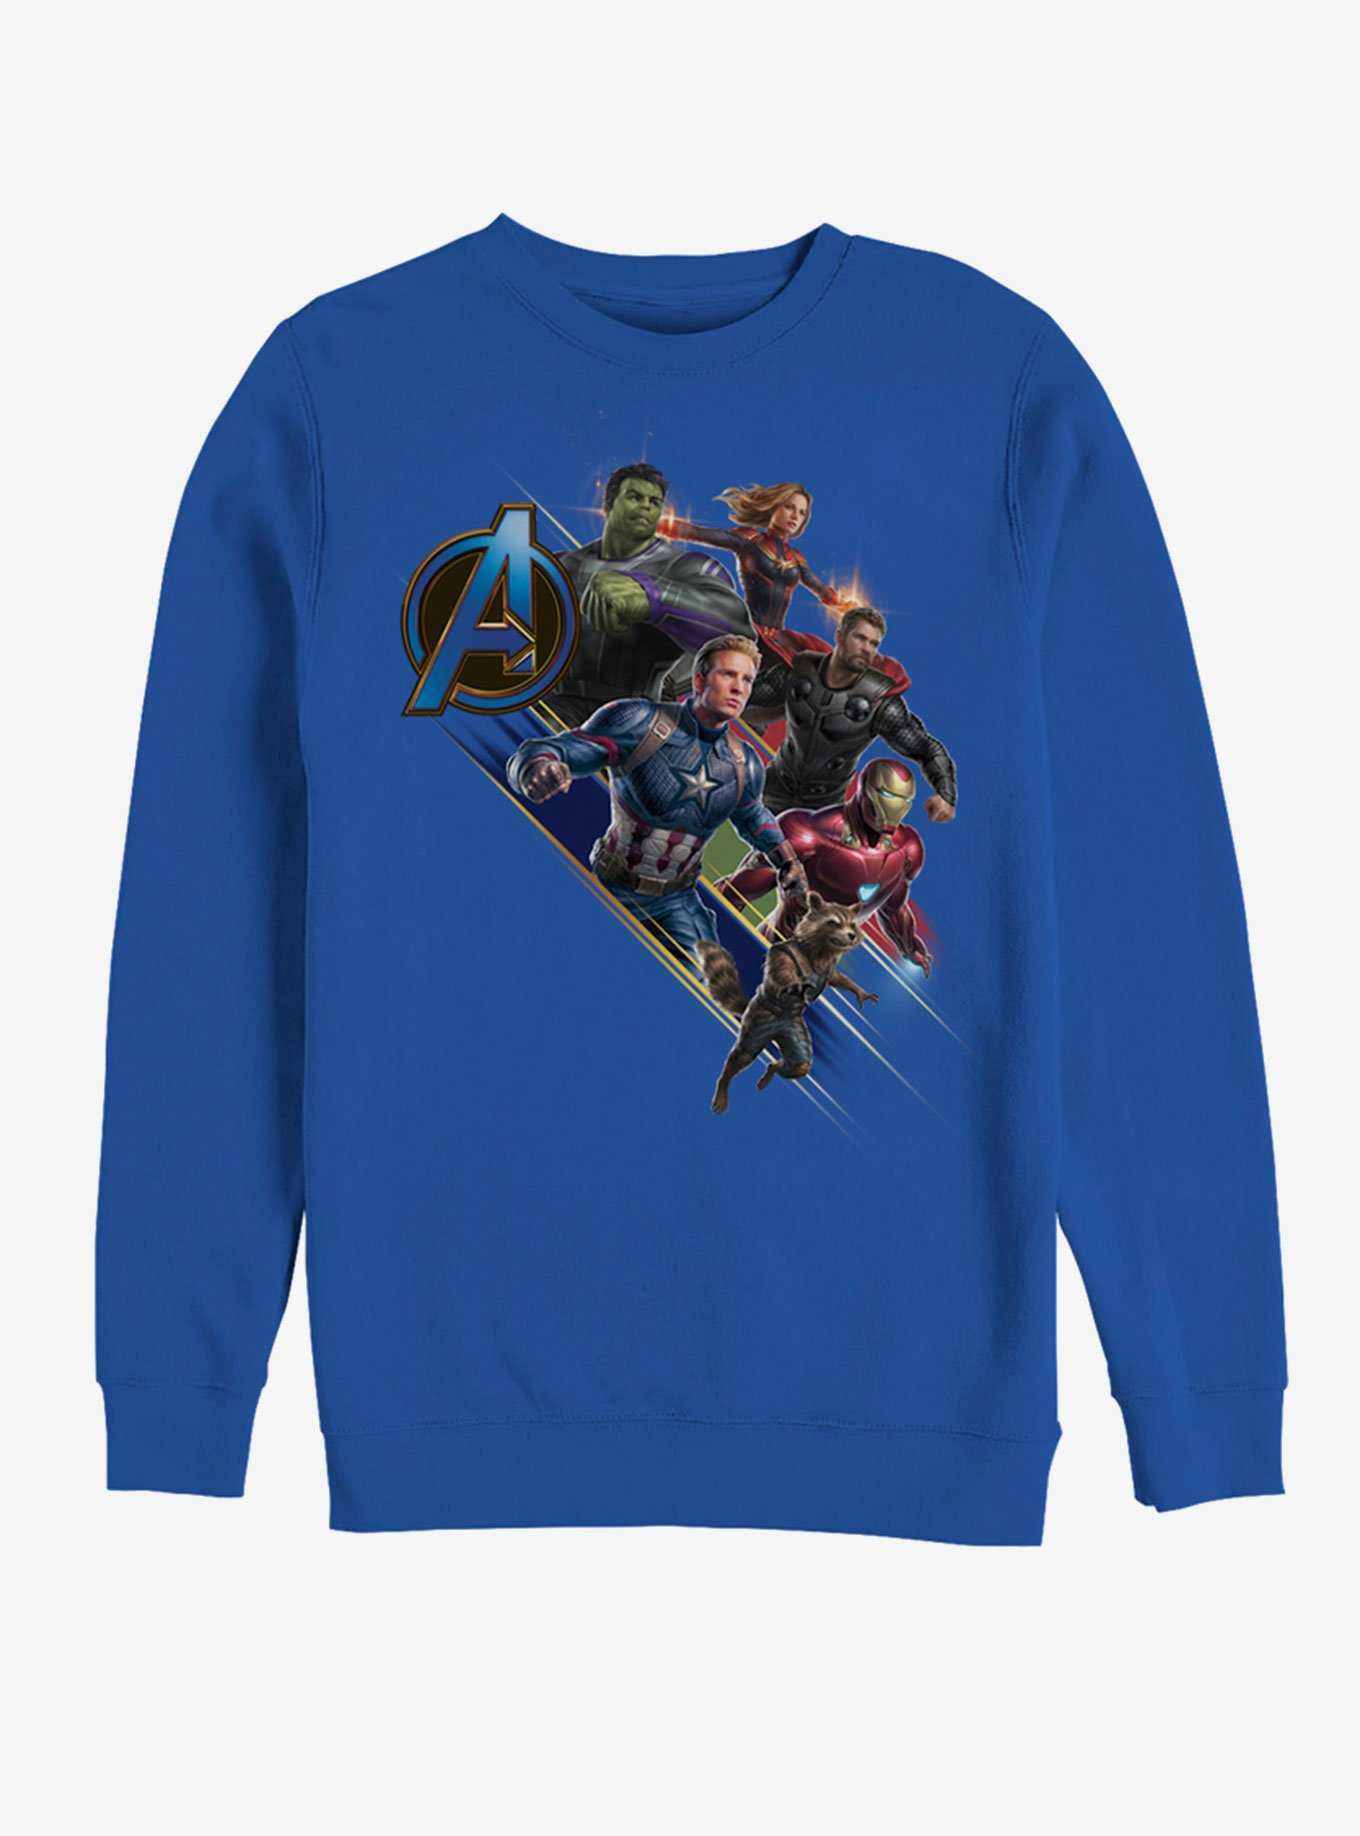 Marvel Avengers: Endgame Angled Shot Sweatshirt, , hi-res